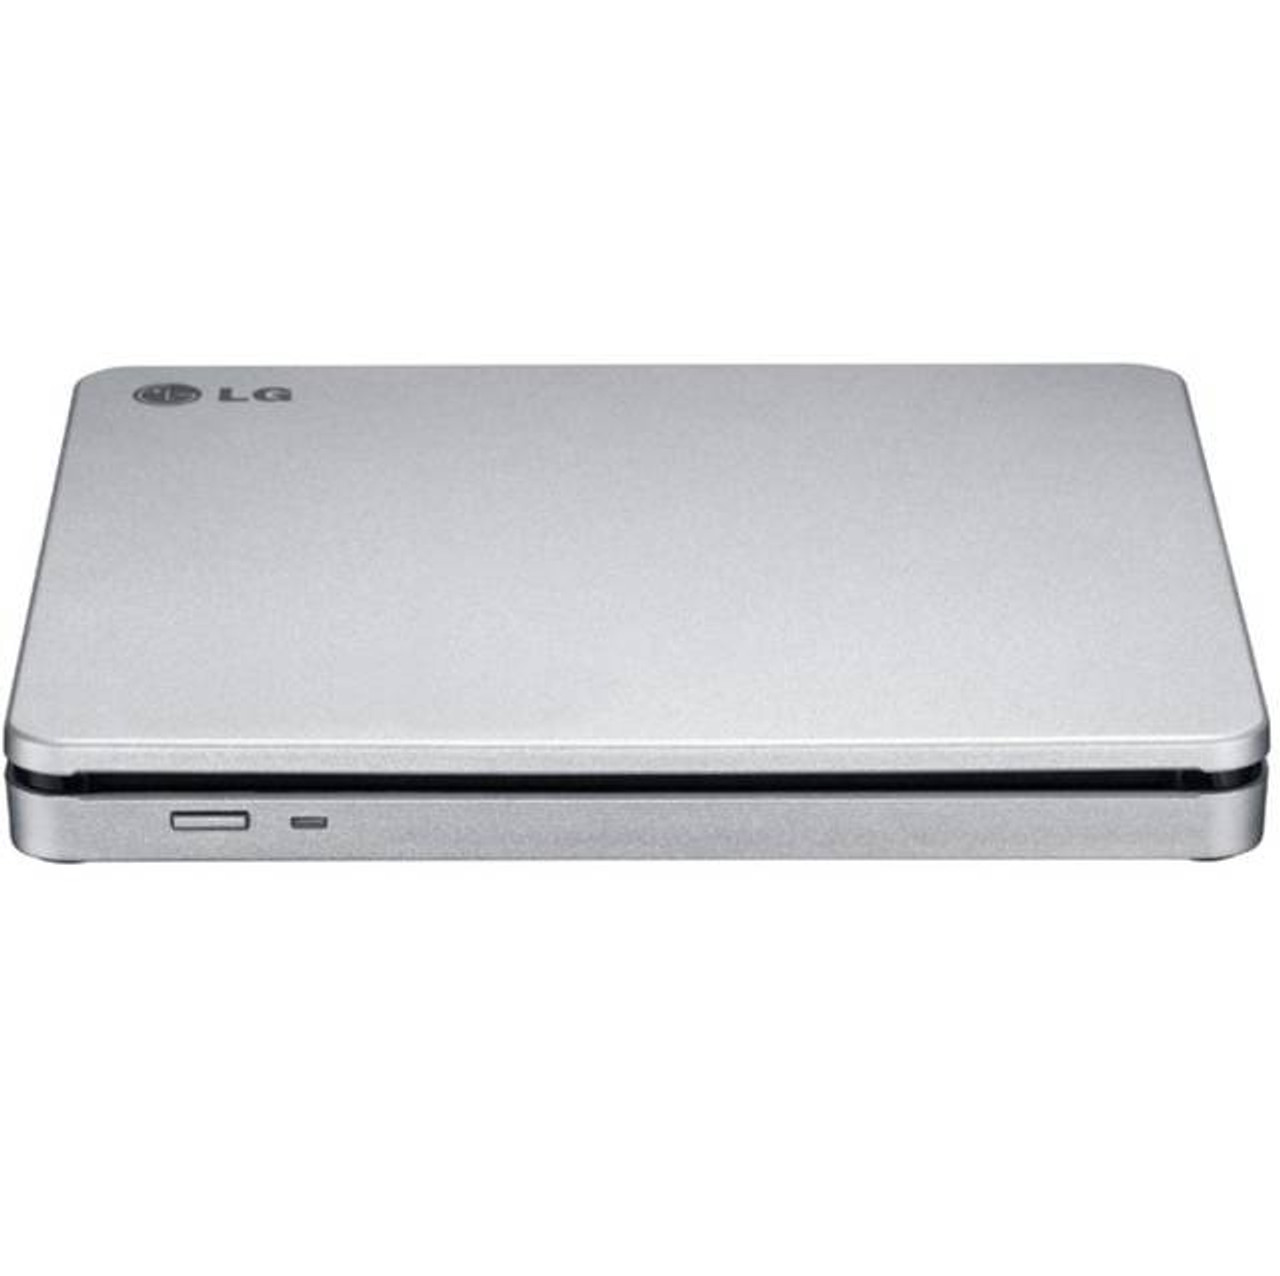 LG Electronics GP70NS50 8X USB 2.0 Ultra Slim Portable DVDå±RW External Drive w/ M-DISC,  (Silver)